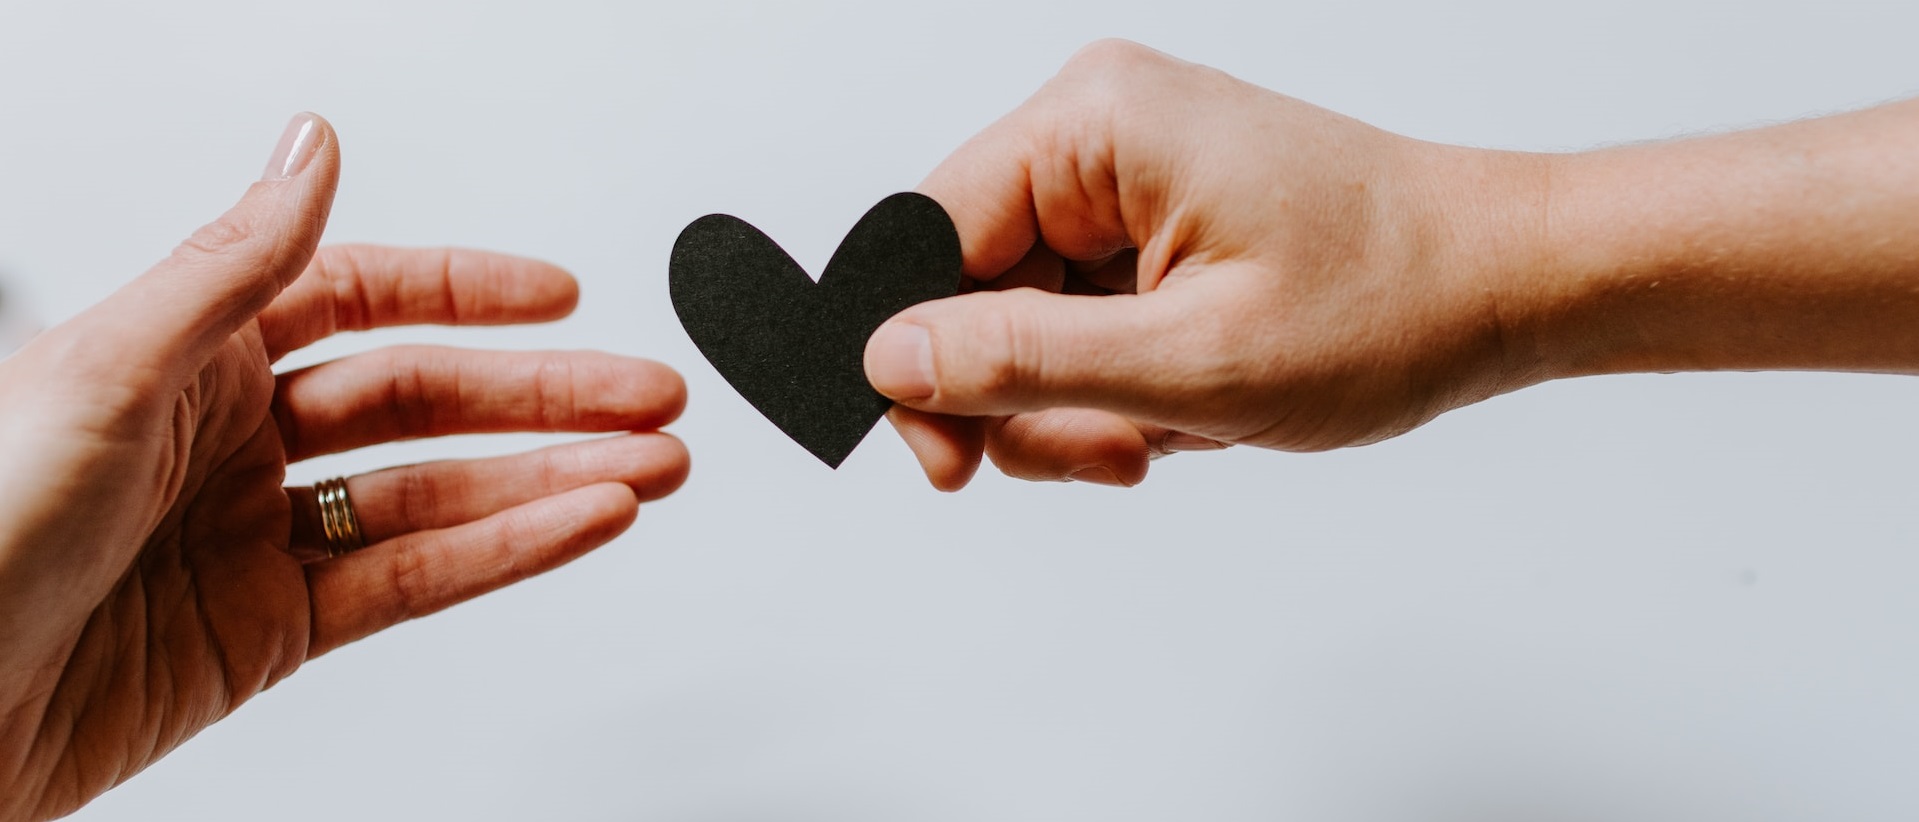 A photograph of a hand handing another hand a paper heart